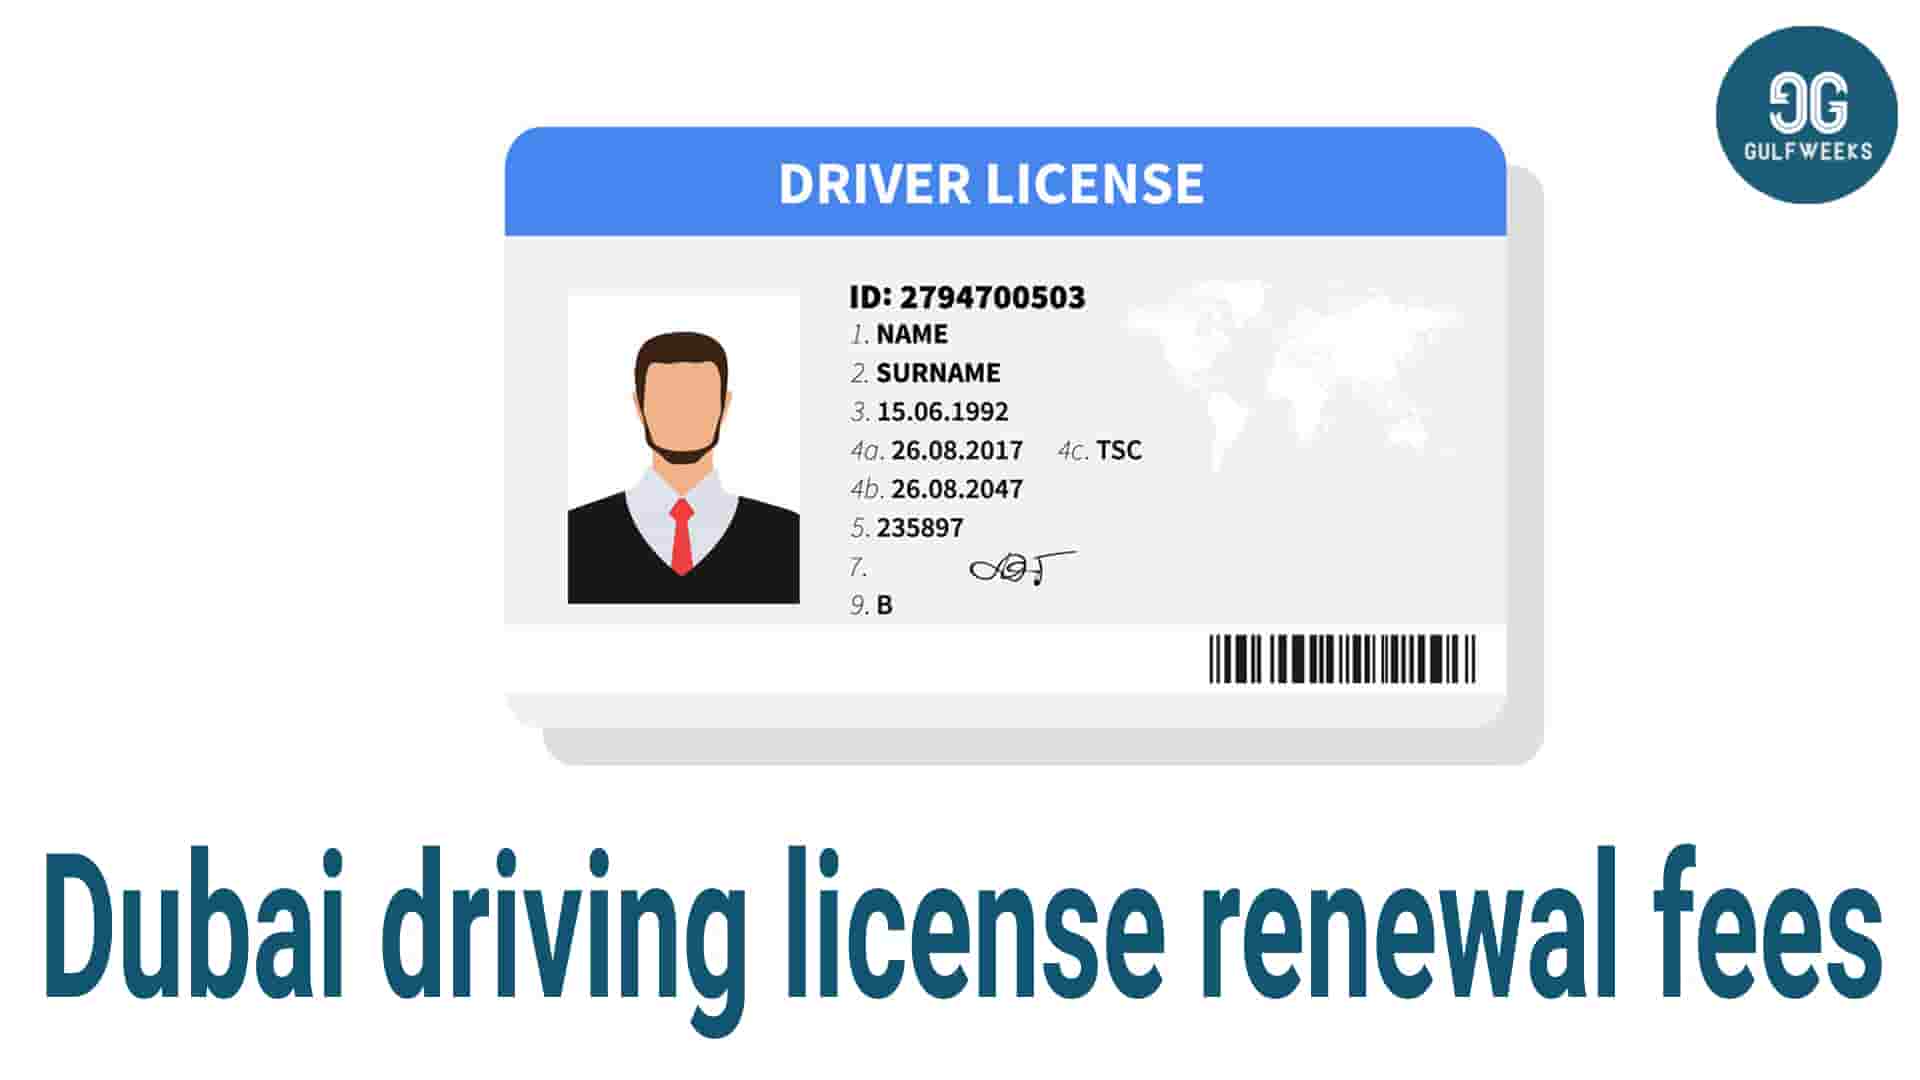 Dubai driving license renewal fees